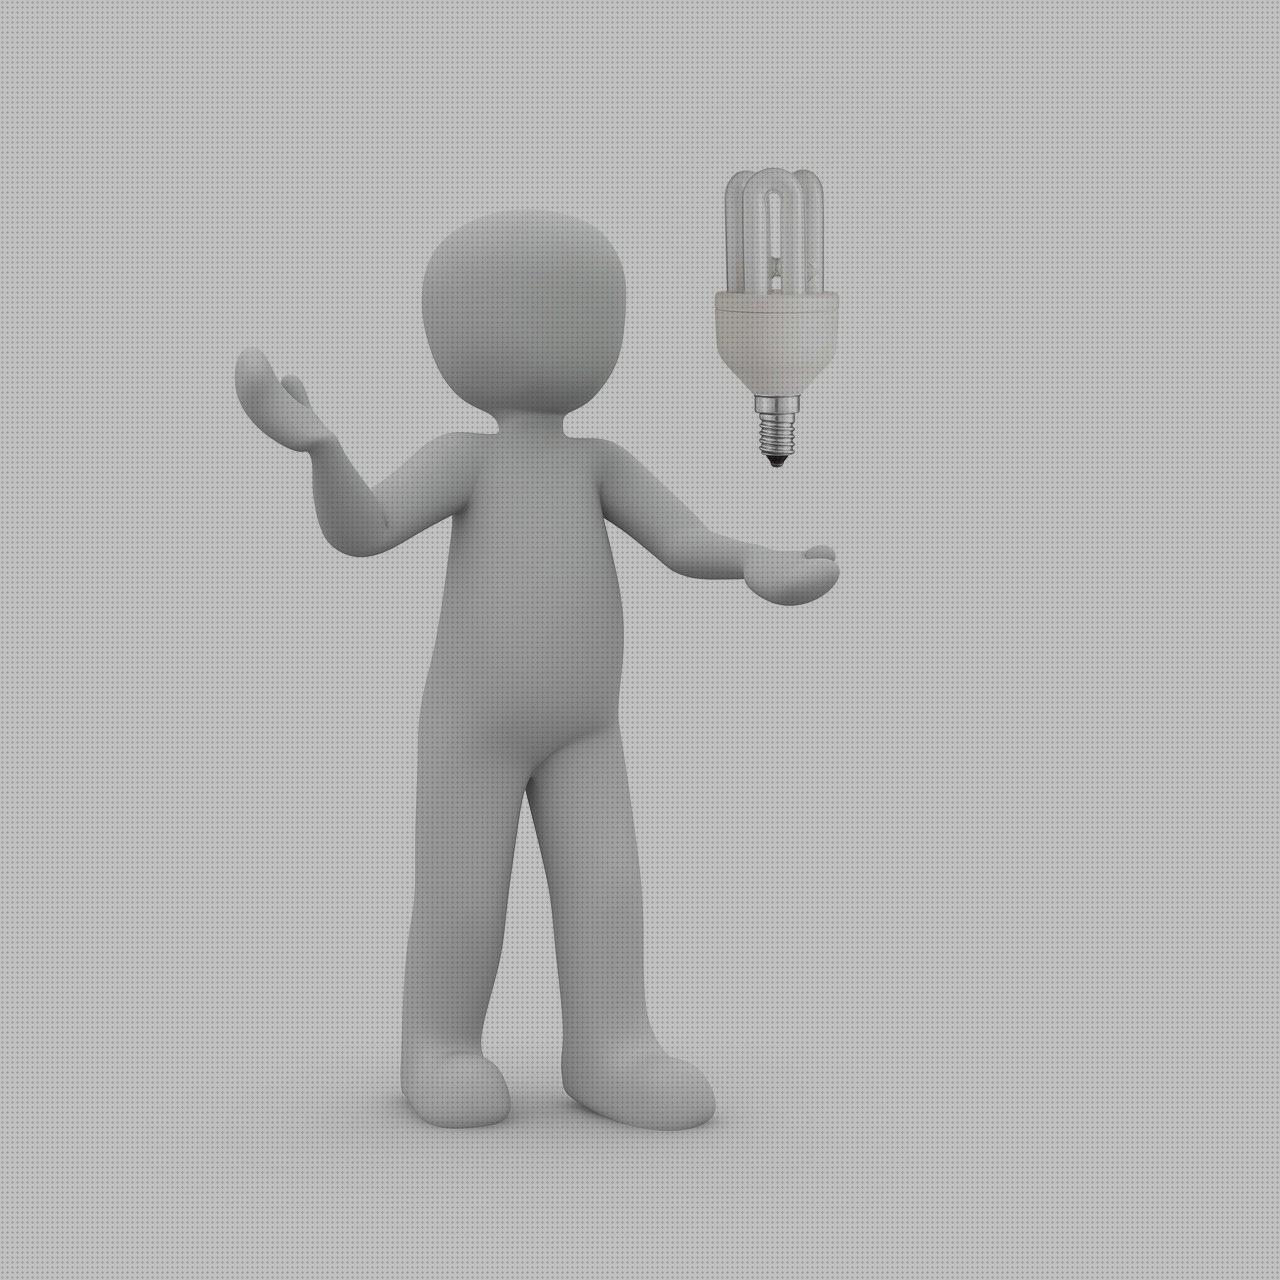 ¿Dónde poder comprar usb led led lampara led recargable usb?